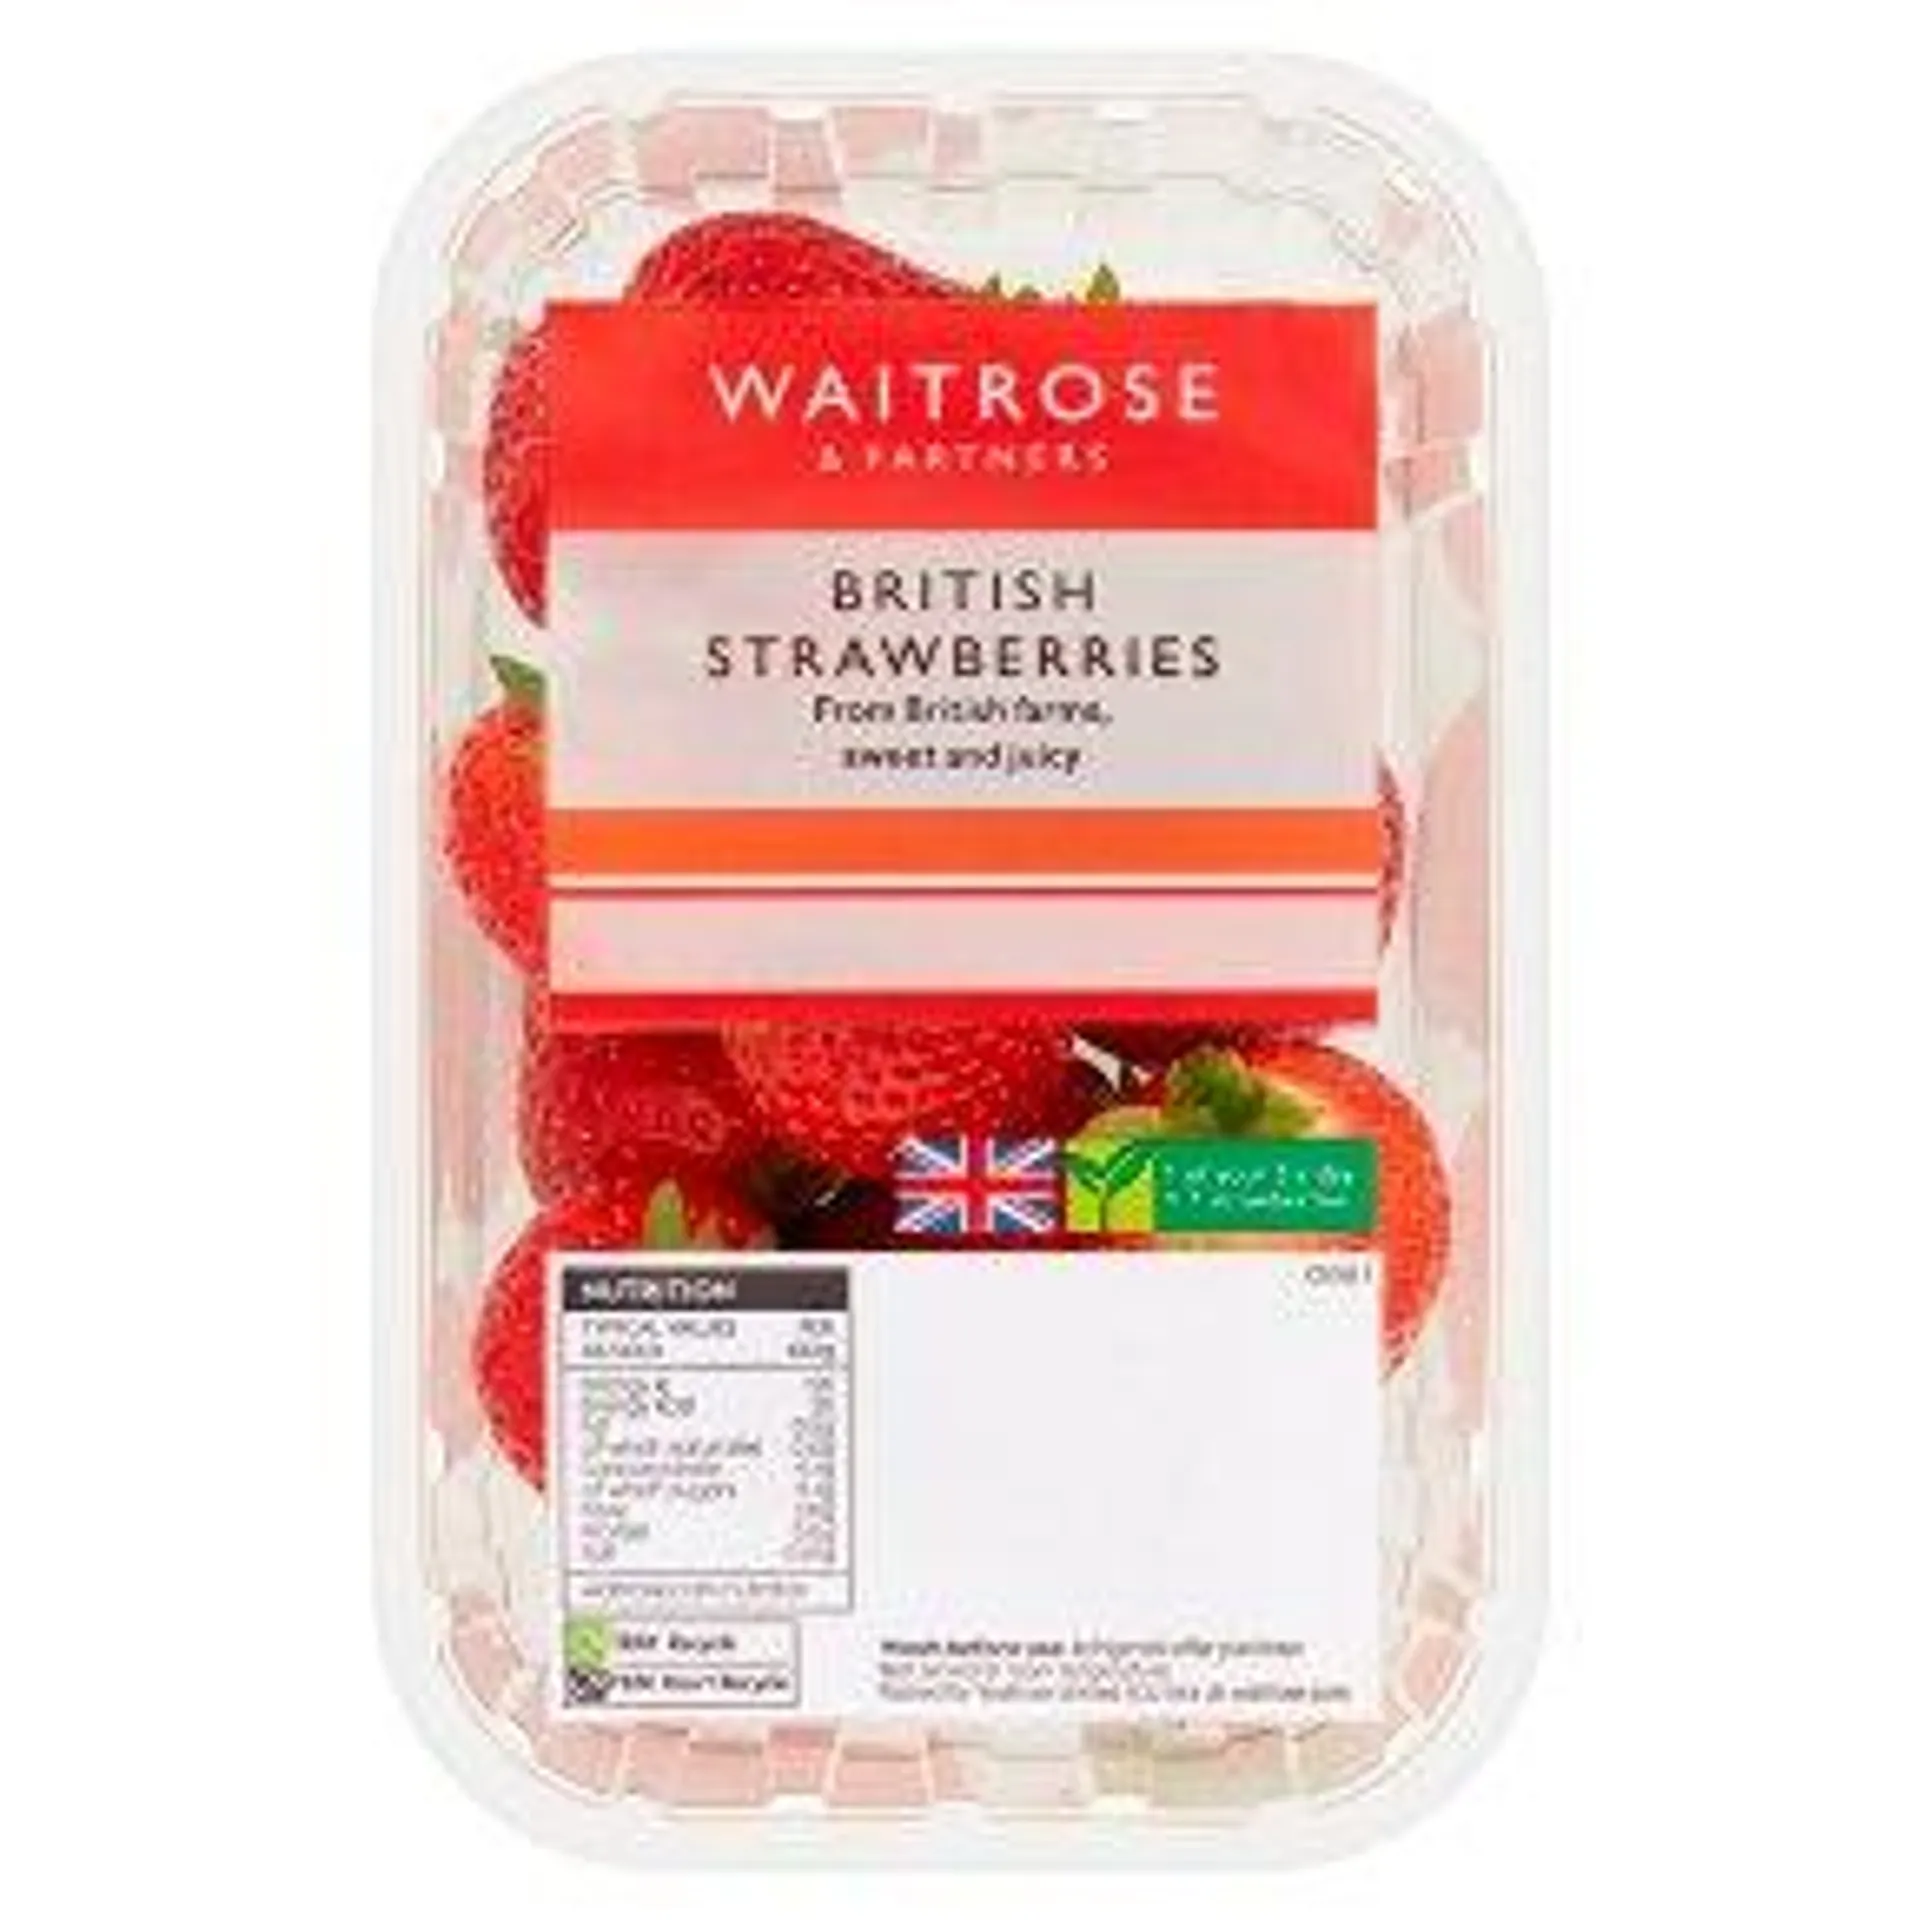 Waitrose Strawberries